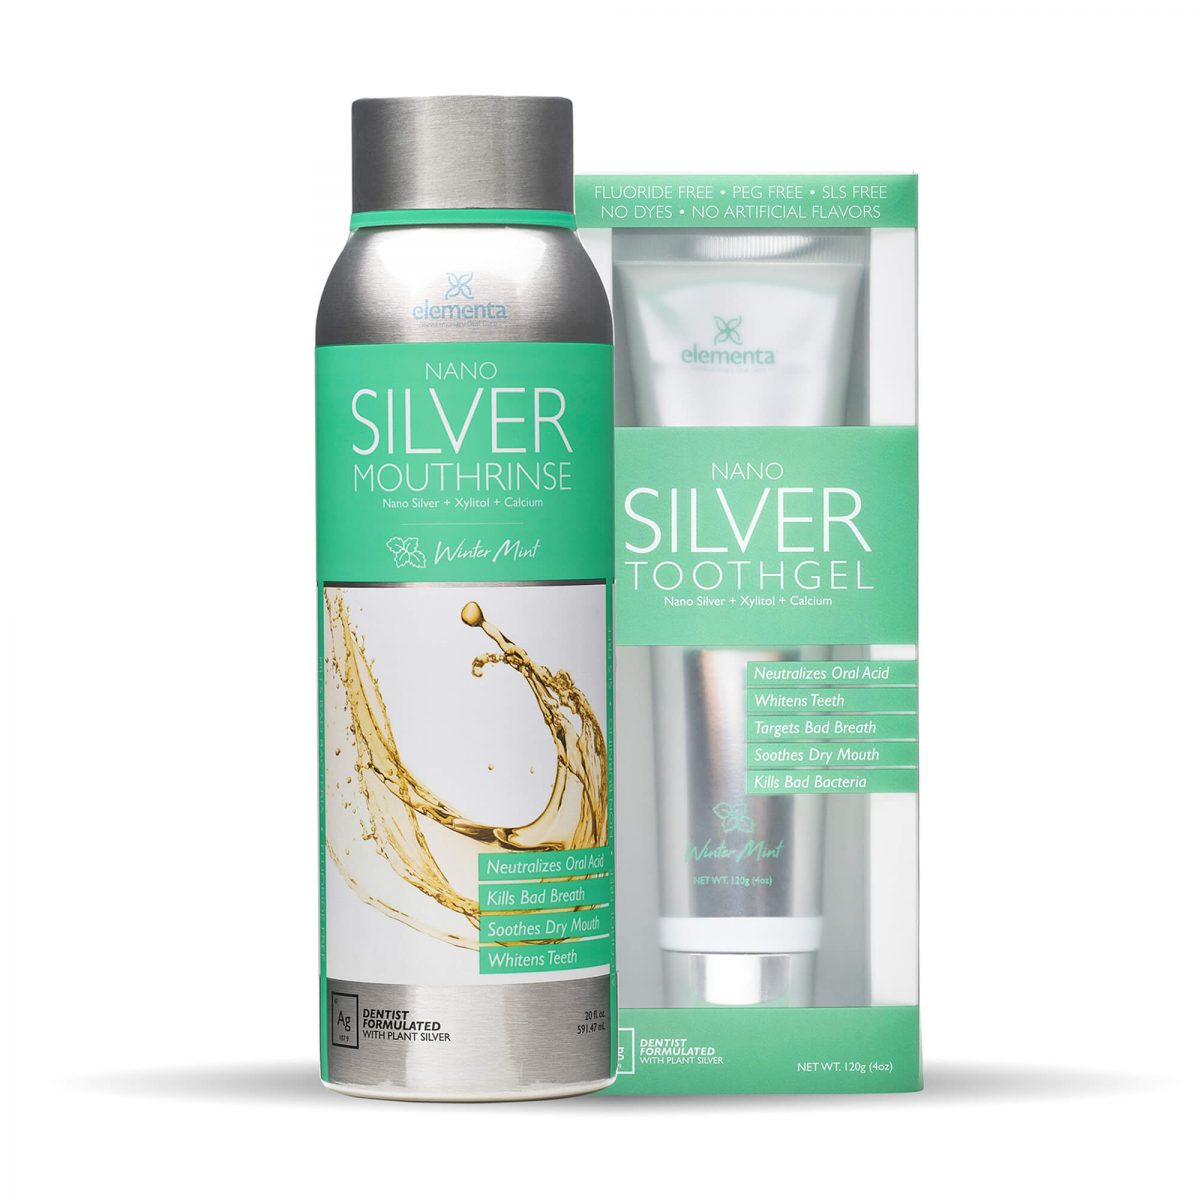 nano silver mouth rinse bundle rinse brush winter mint